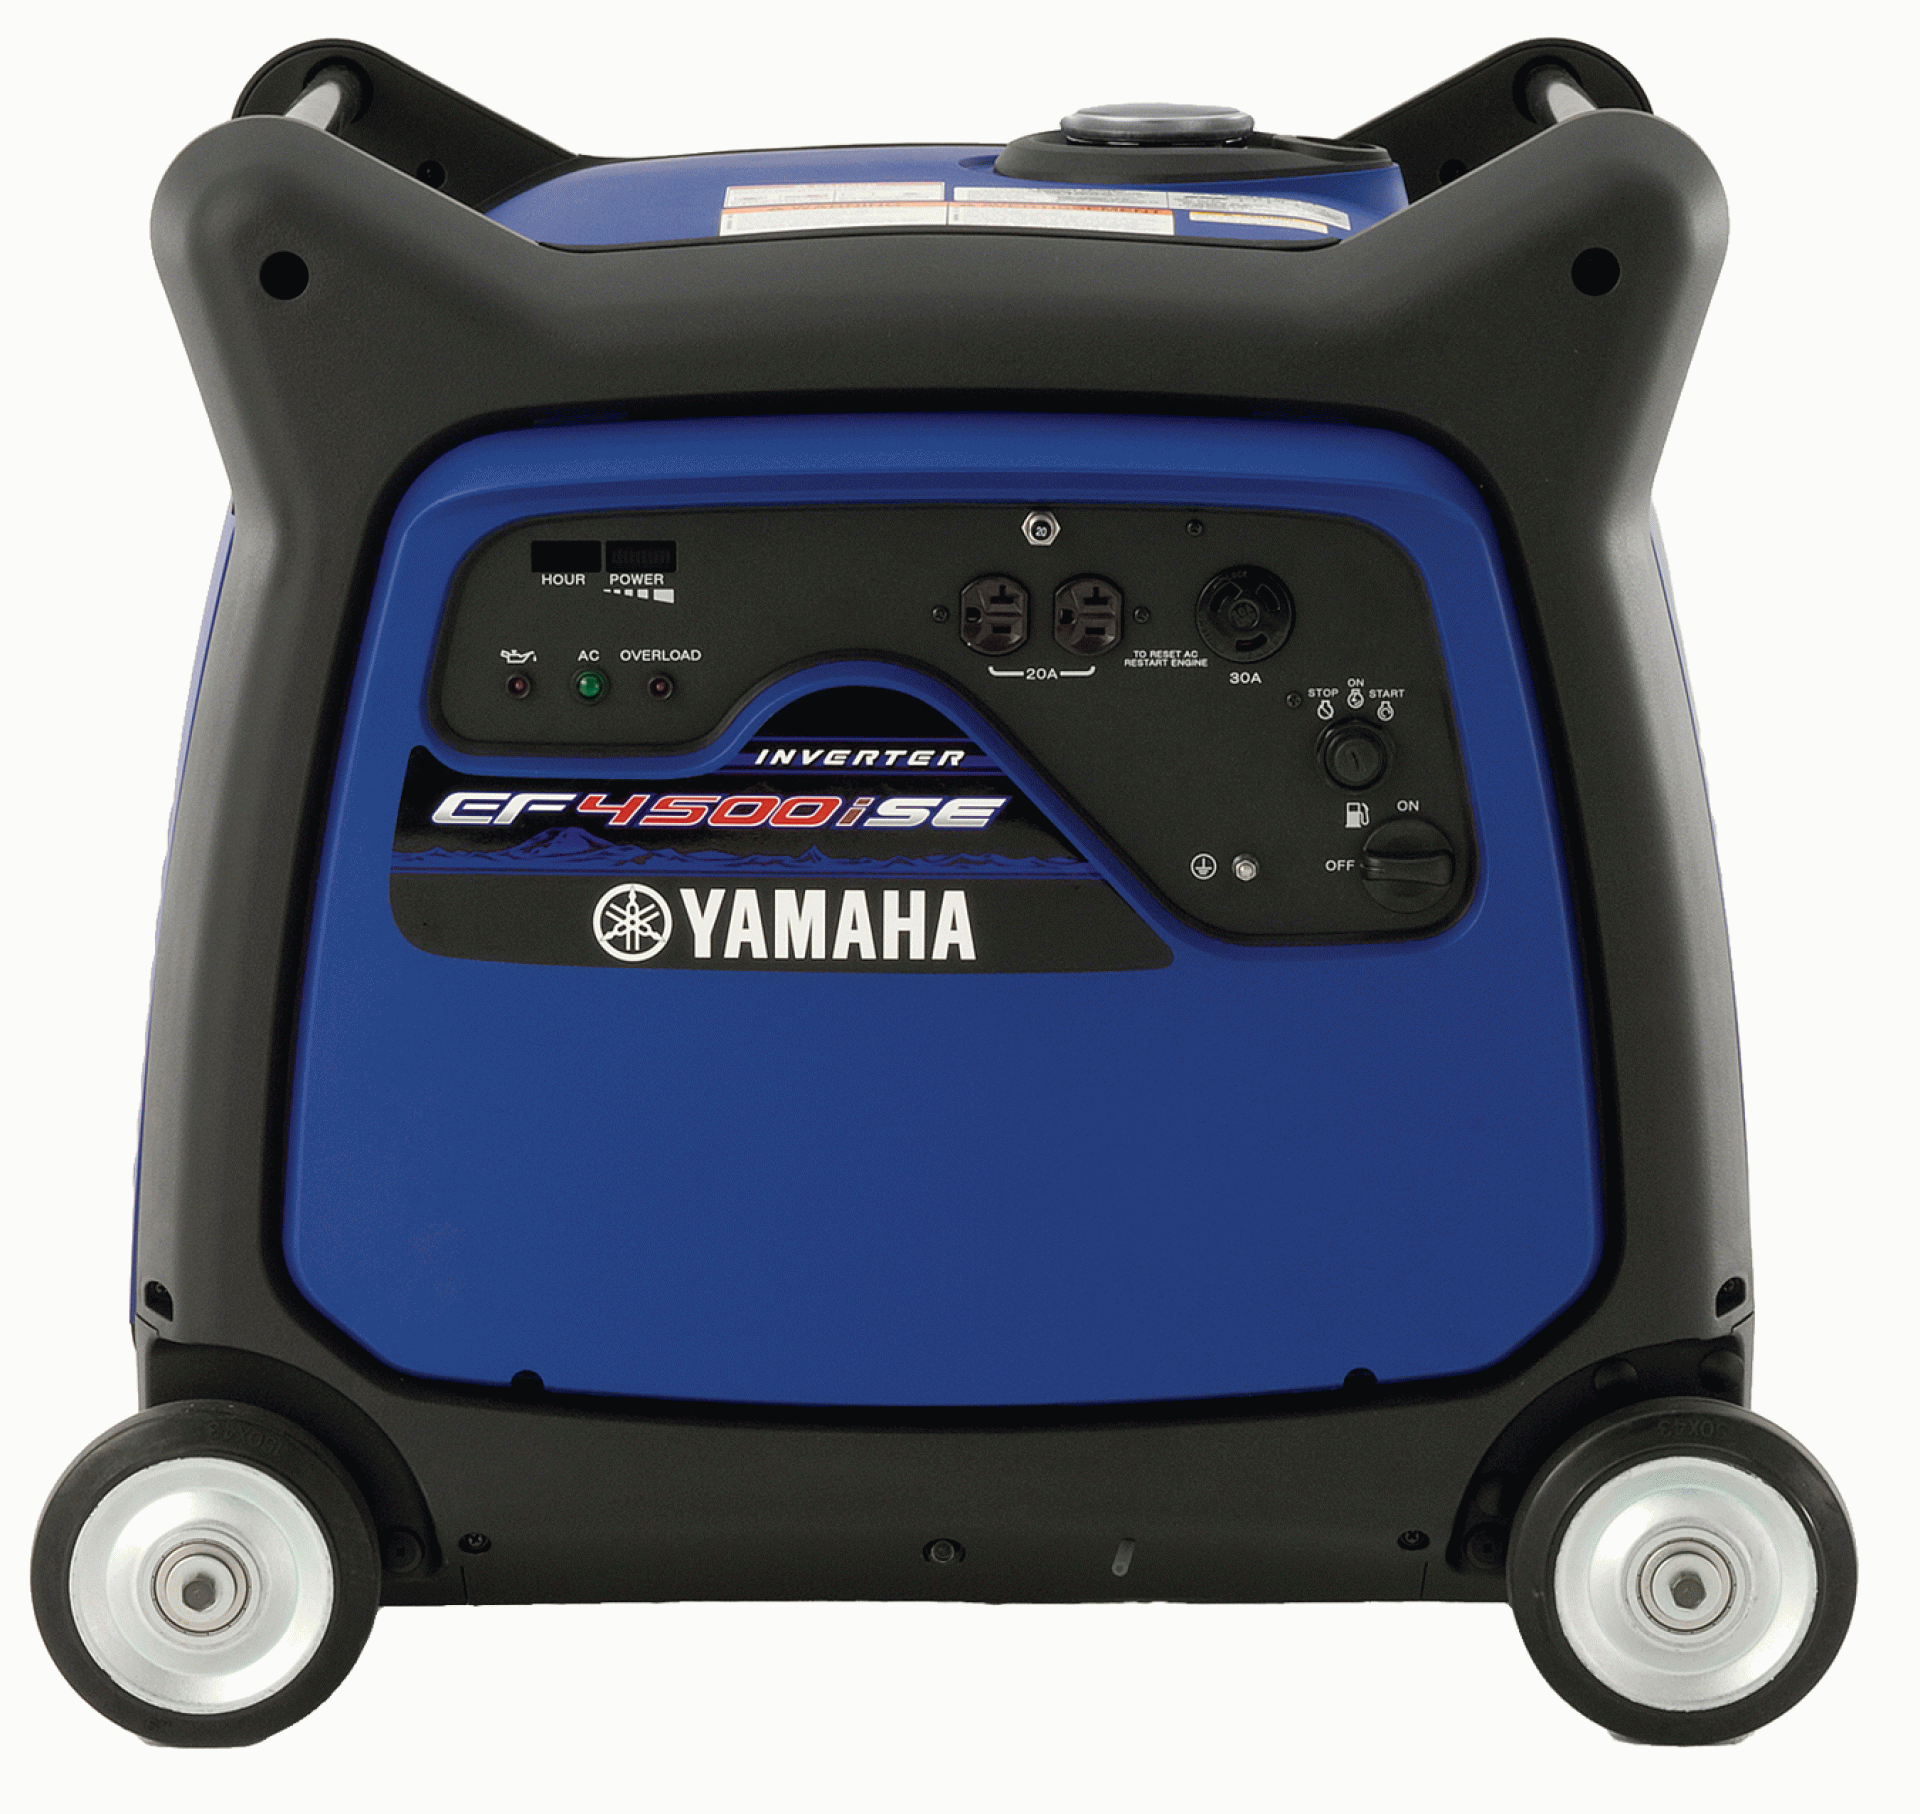 Yamaha | EF4500iSE | Portable Generator 4500 Watt